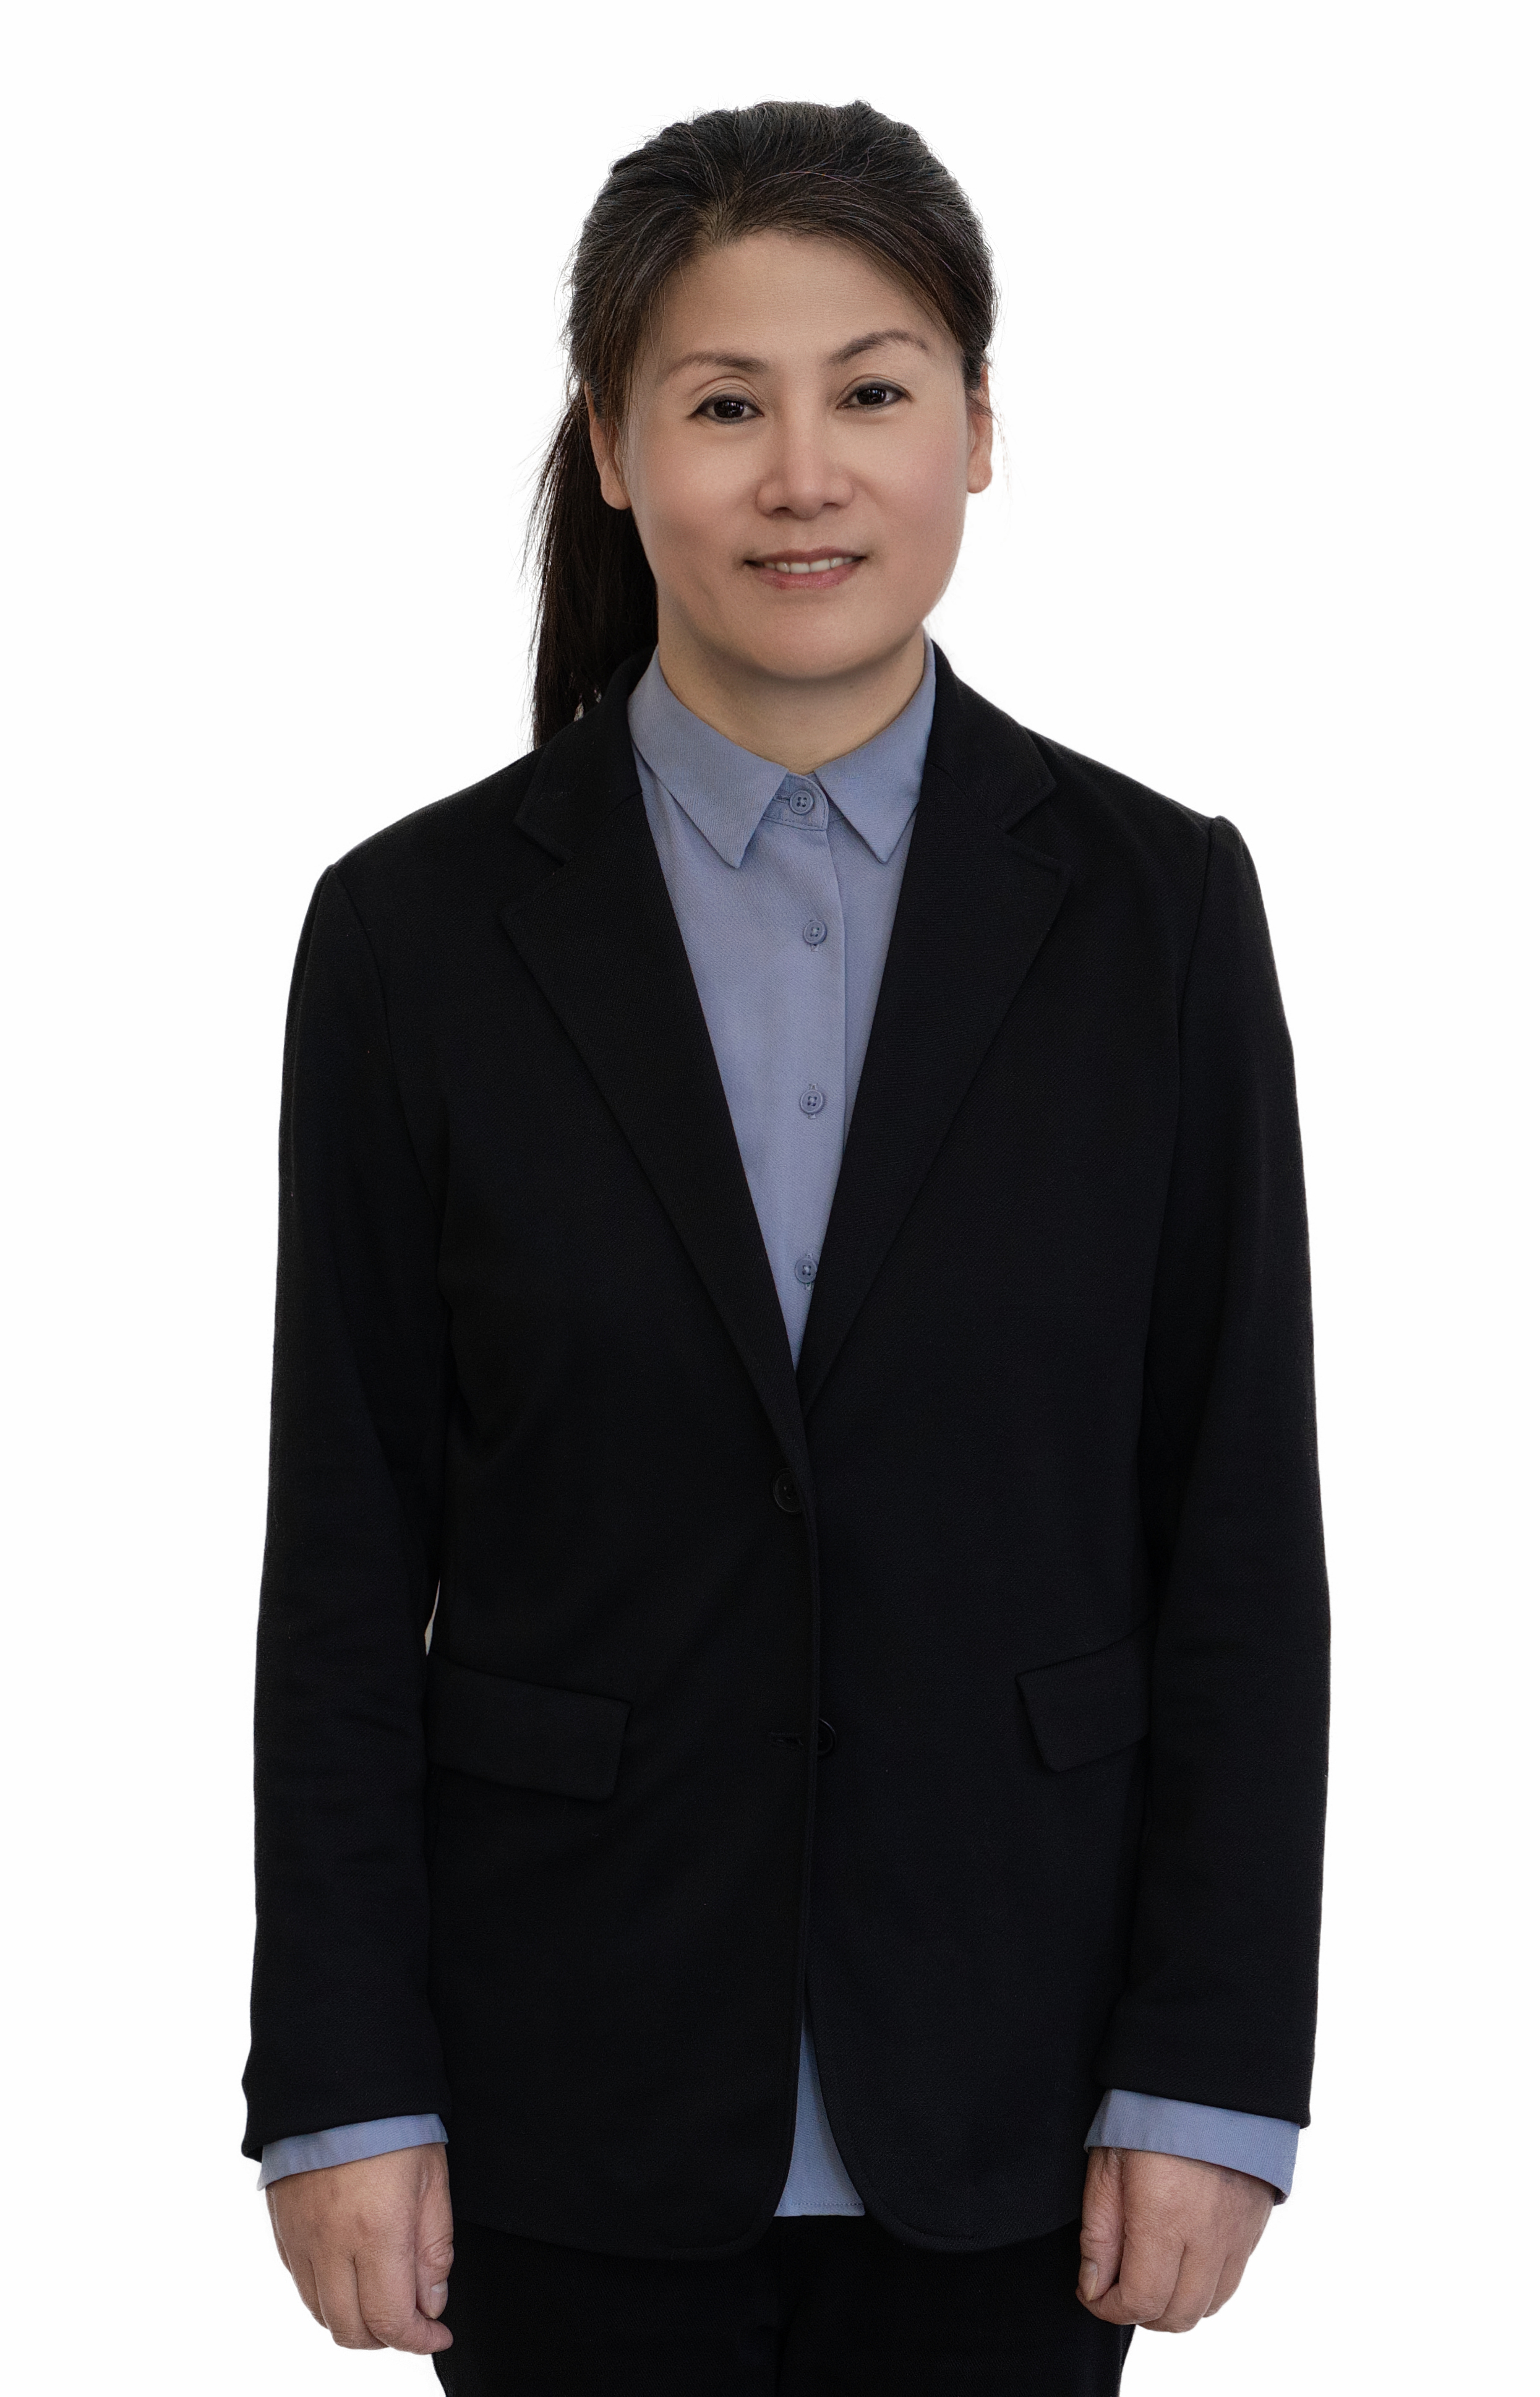 Zhang HongliGlen Waverley branch Real Estate Agent